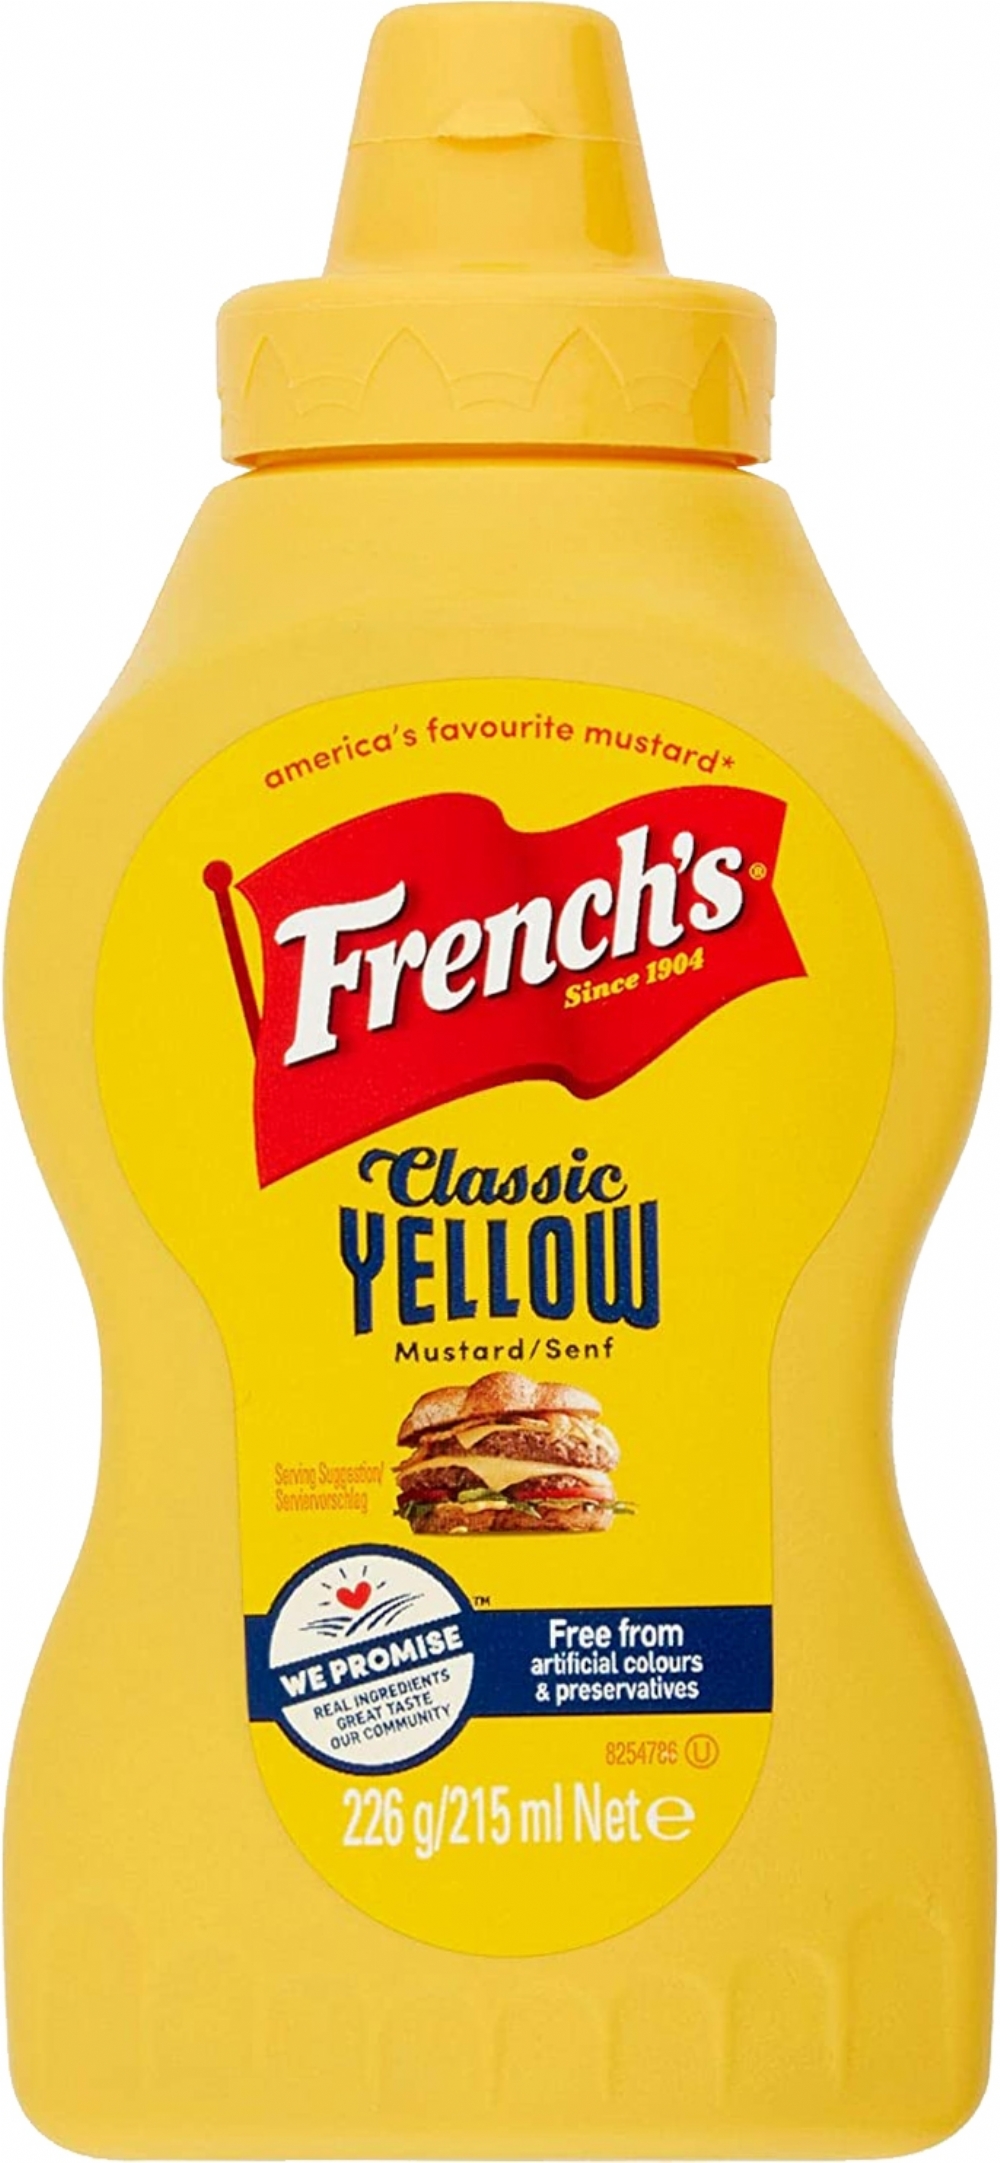 FRENCH'S Classic Yellow Mustard 226g